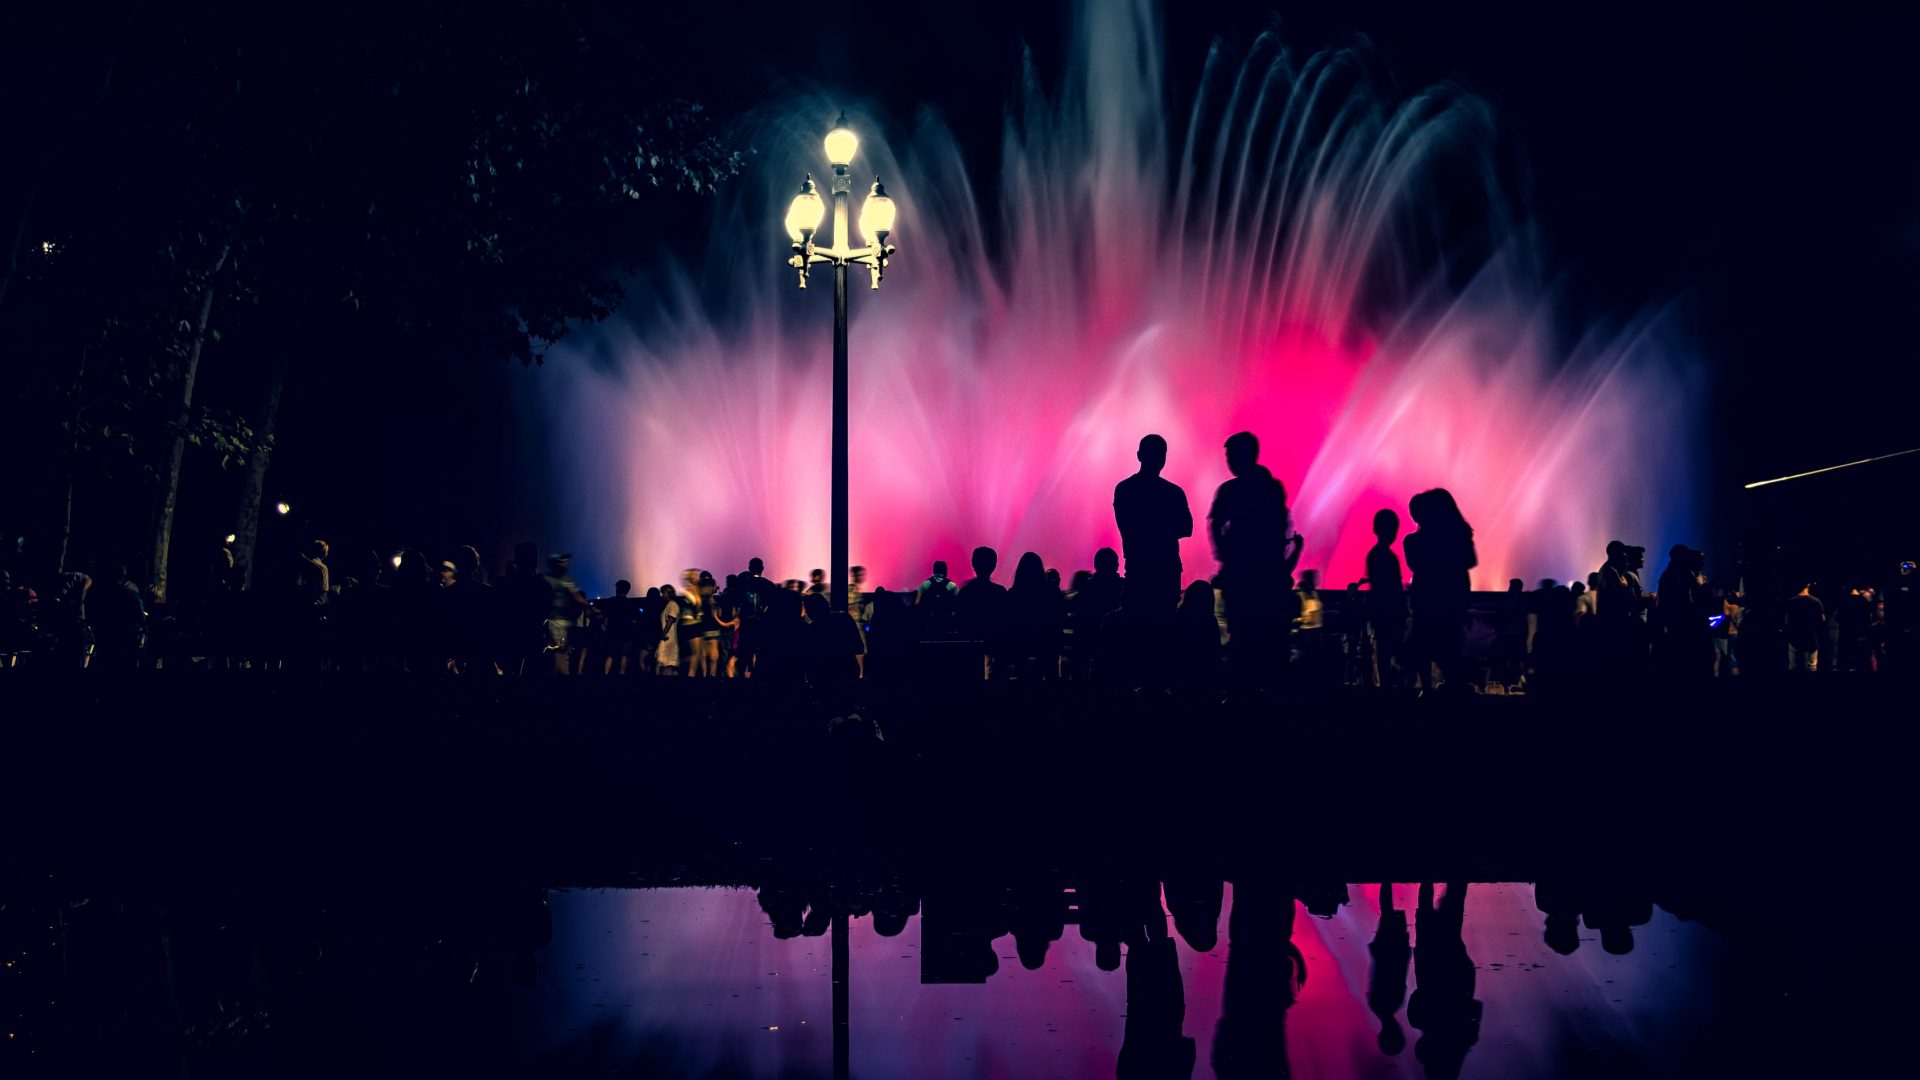 Magic Fountain show, Montjuic, Barcelona